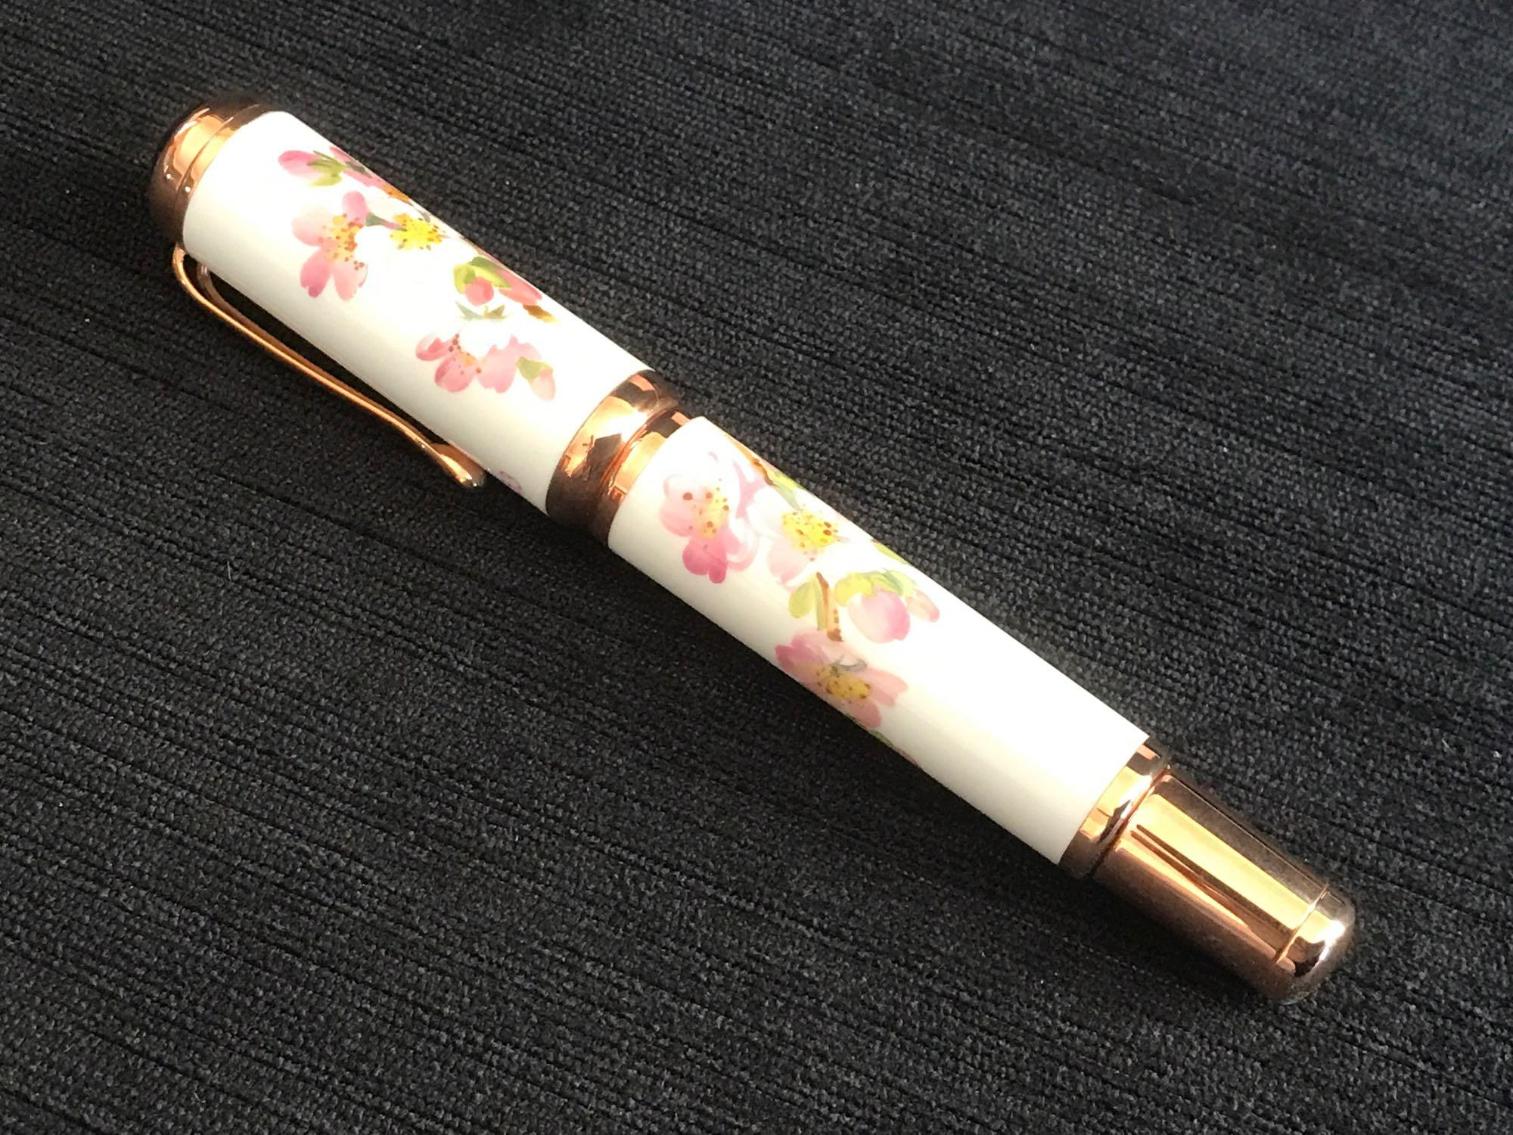 Image for Mont Blanc Sakura Limited Edition Pen in Presentation Case 